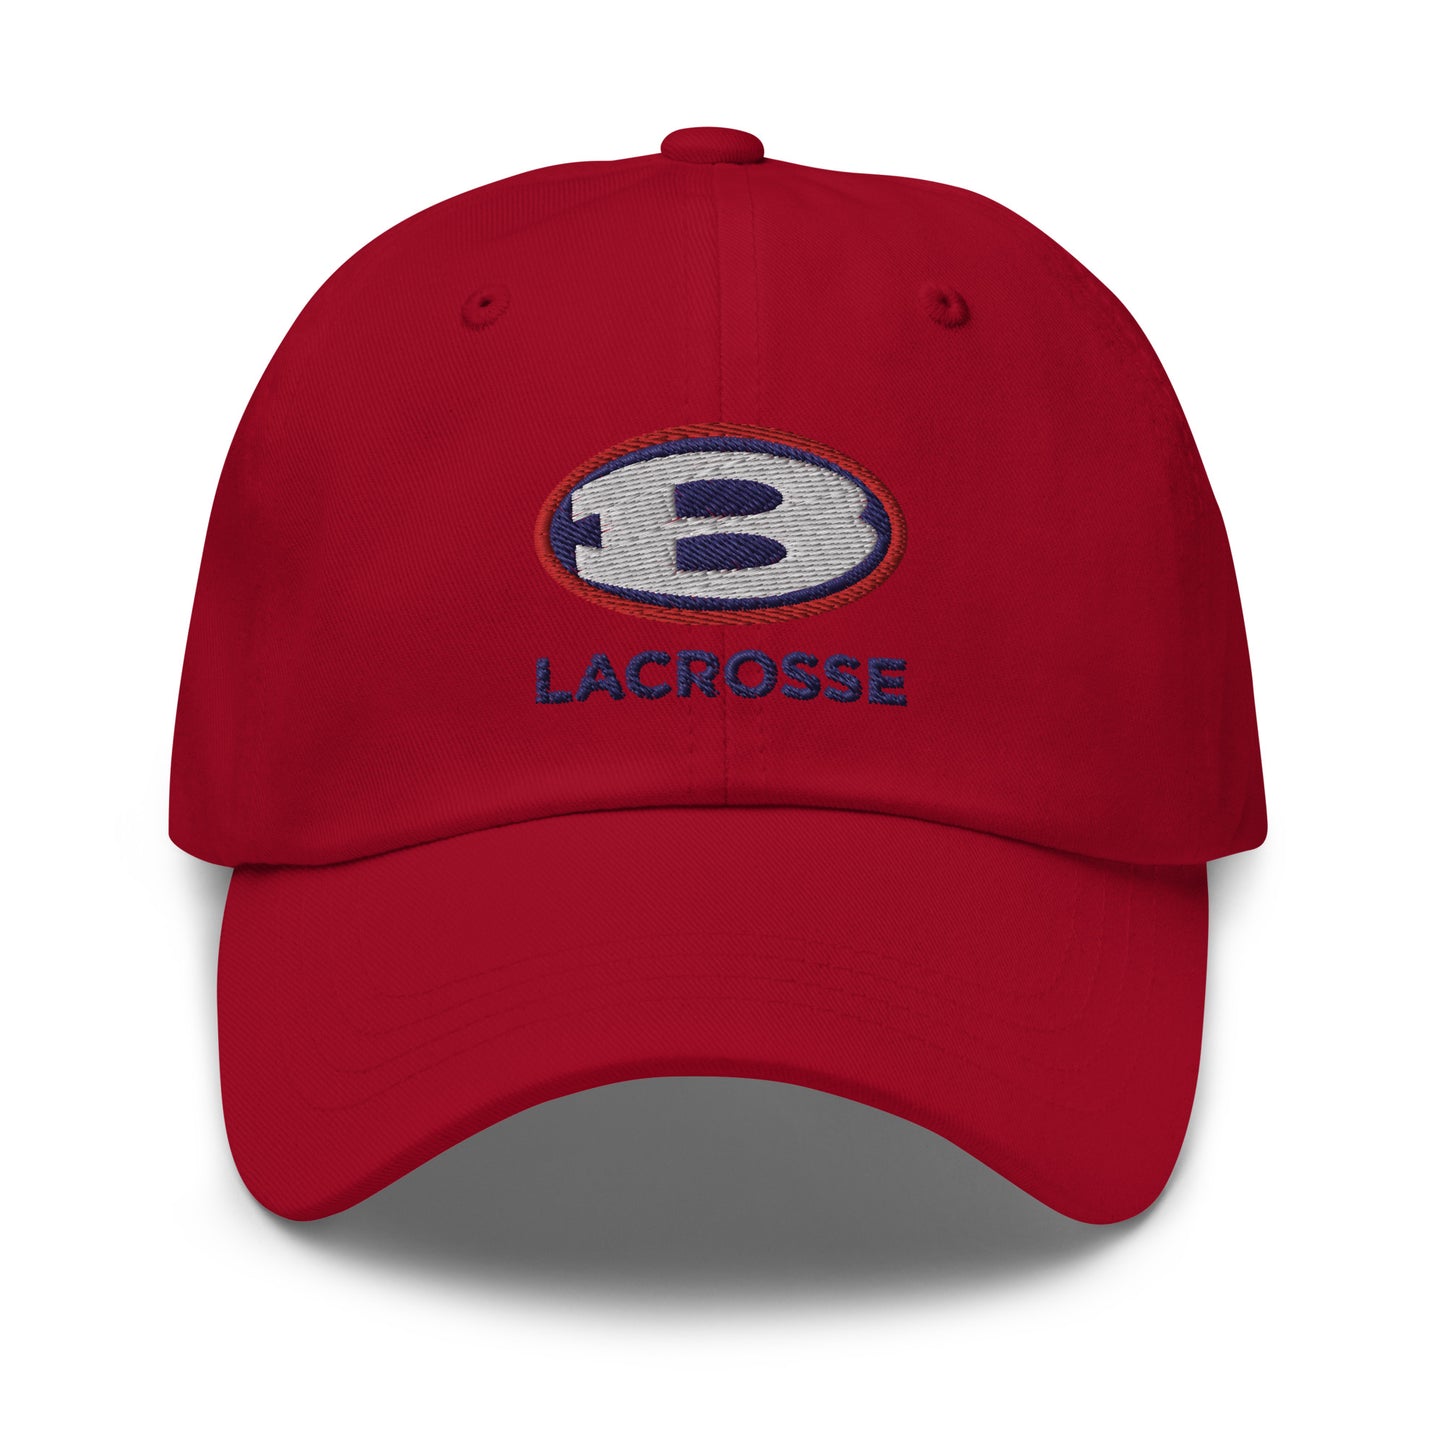 Bellport Lacrosse - Dad hat